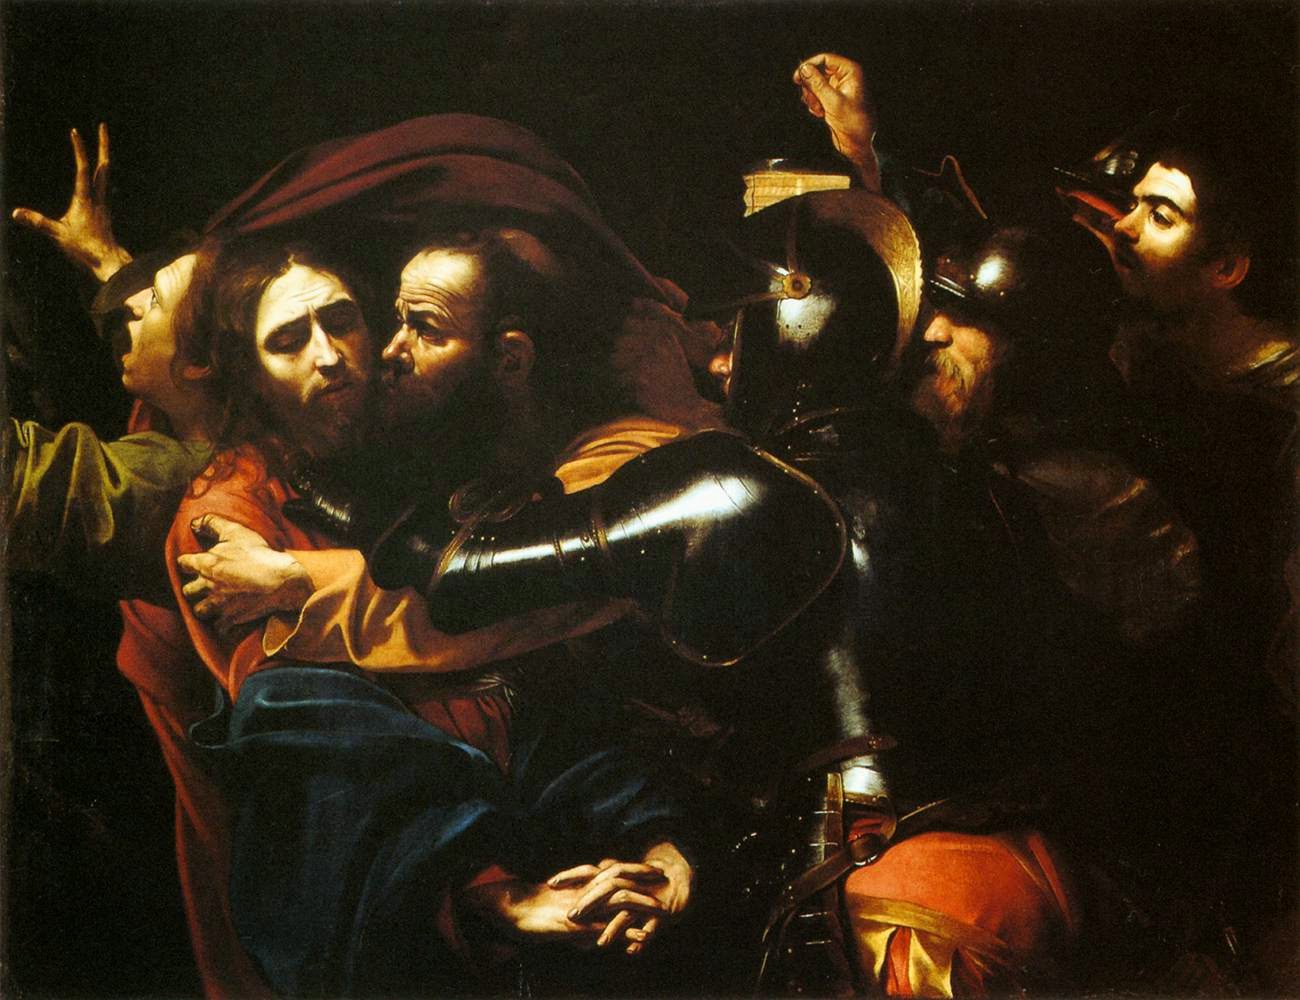 Caravaggio, The Taking of Christ, 1602